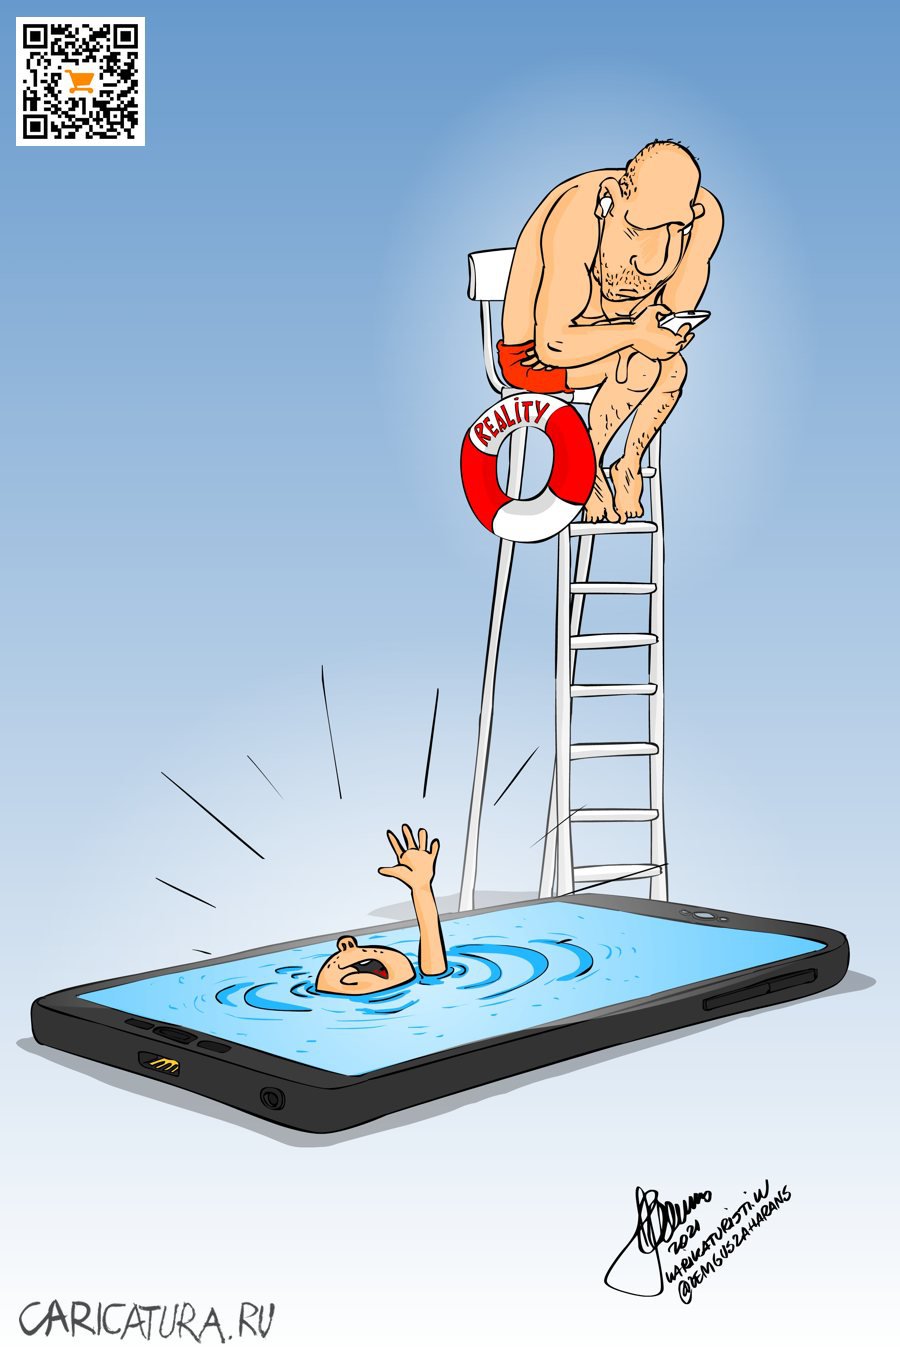 Карикатура "Смартфоны", Zemgus Zaharans